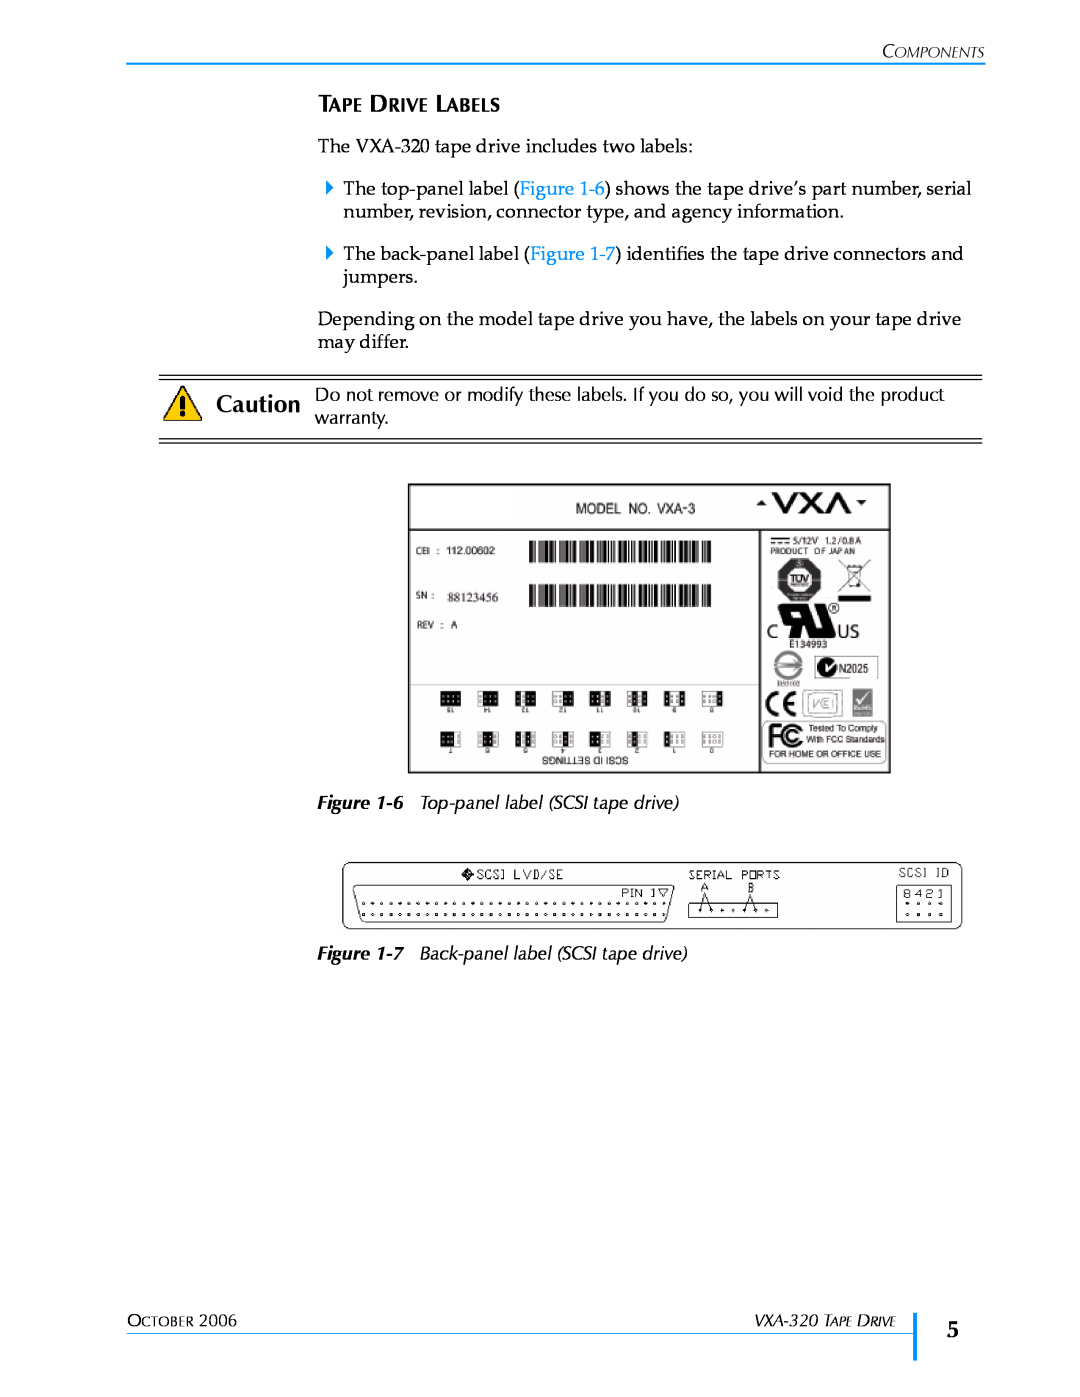 Tandberg Data VXA-320 (VXA-3) manual Tape Drive Labels 